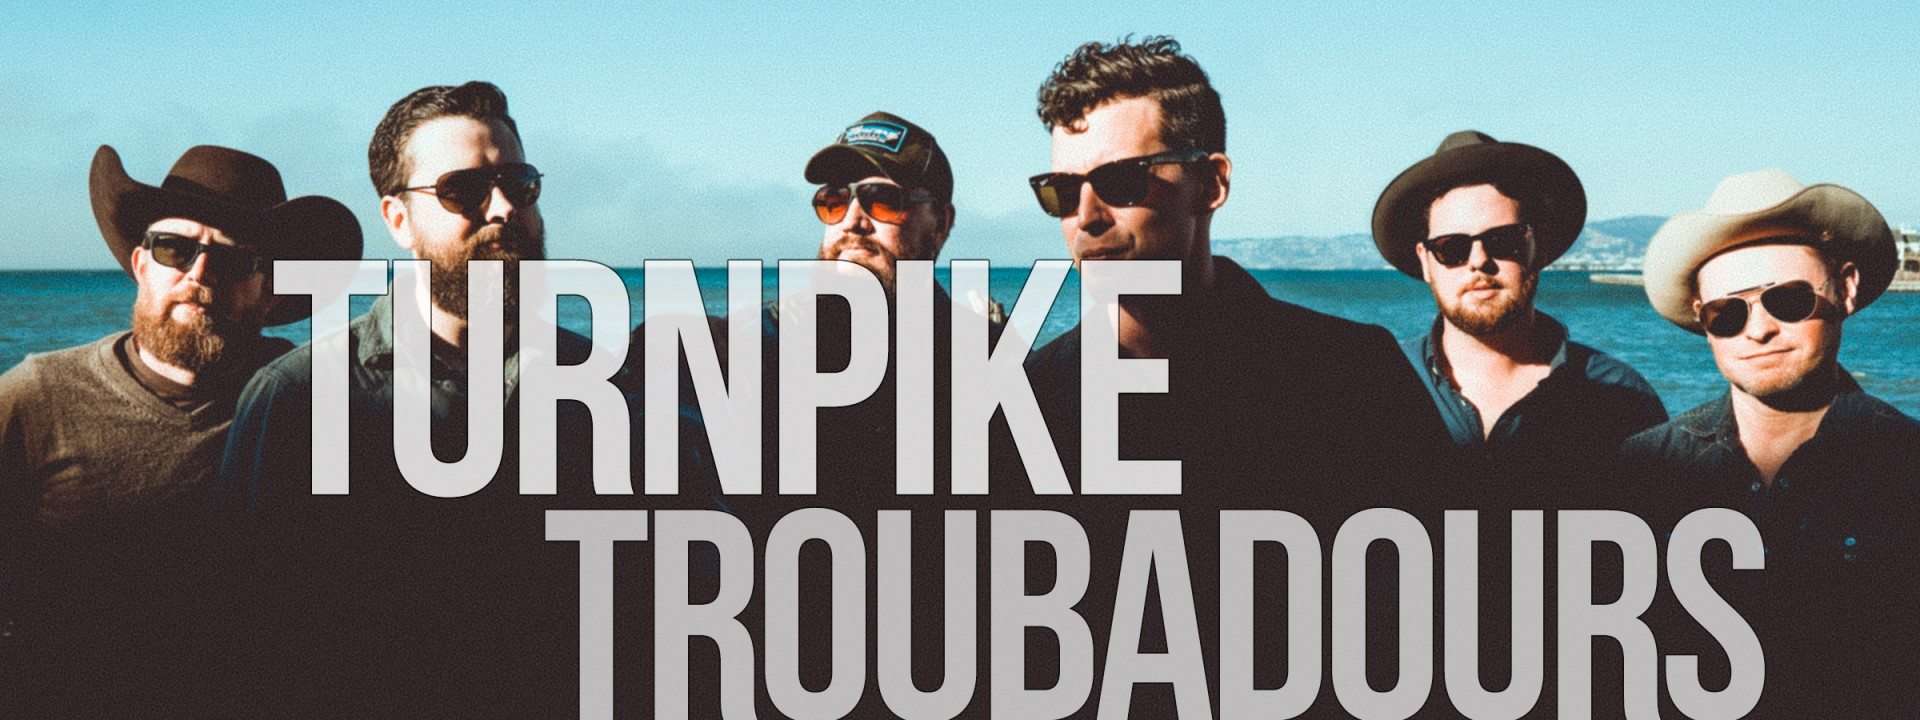 Turnpike-Troubadours_button